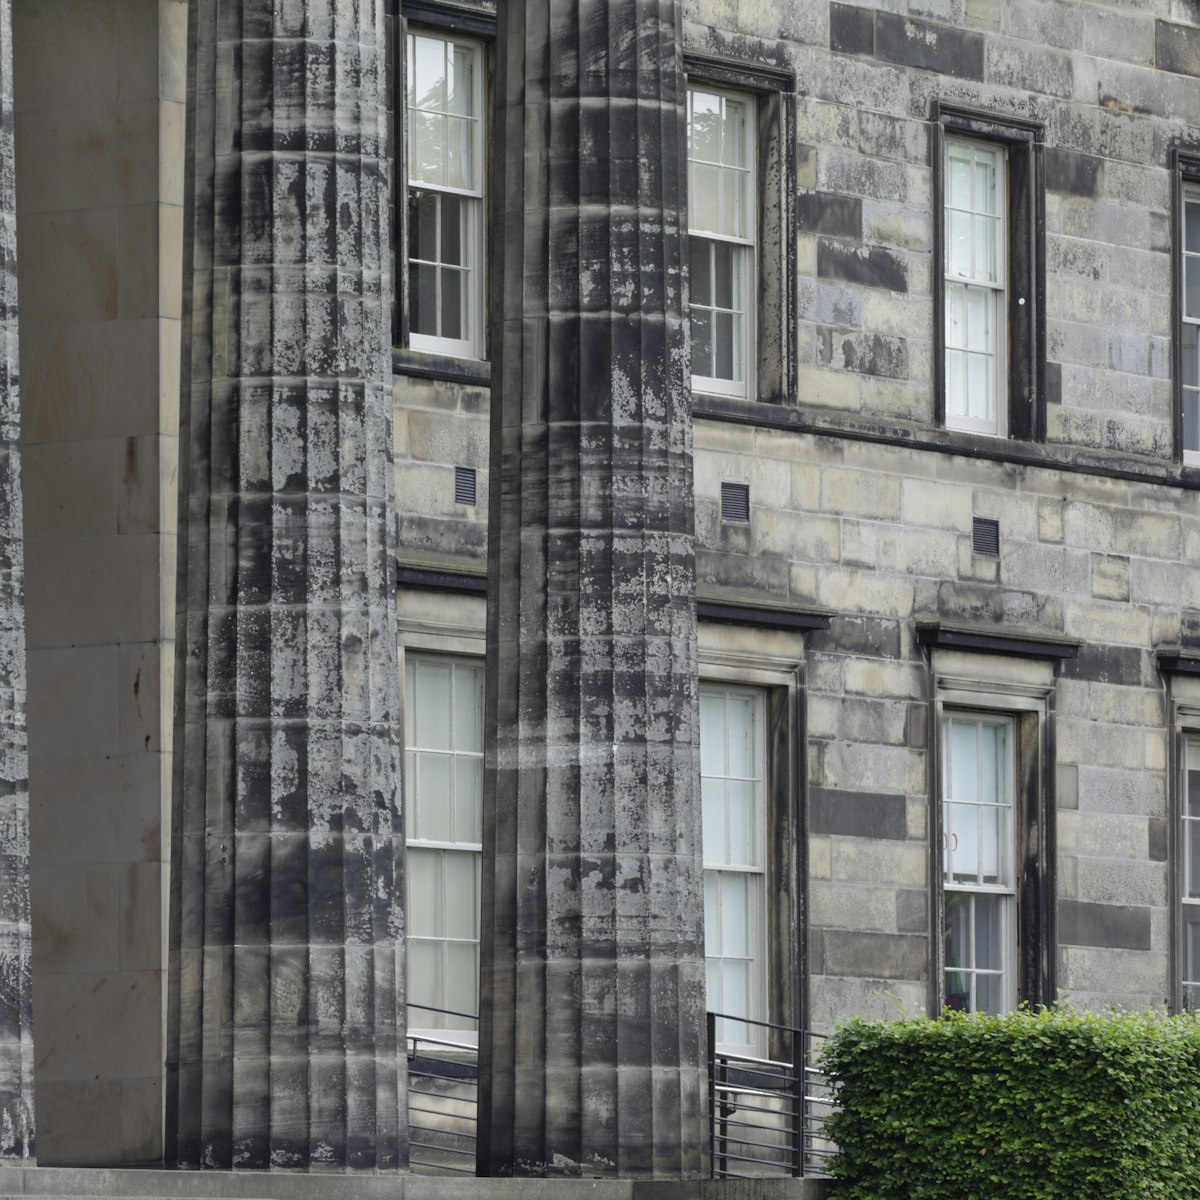 Detail of main facade of Scottish National Gallery of Modern Art.